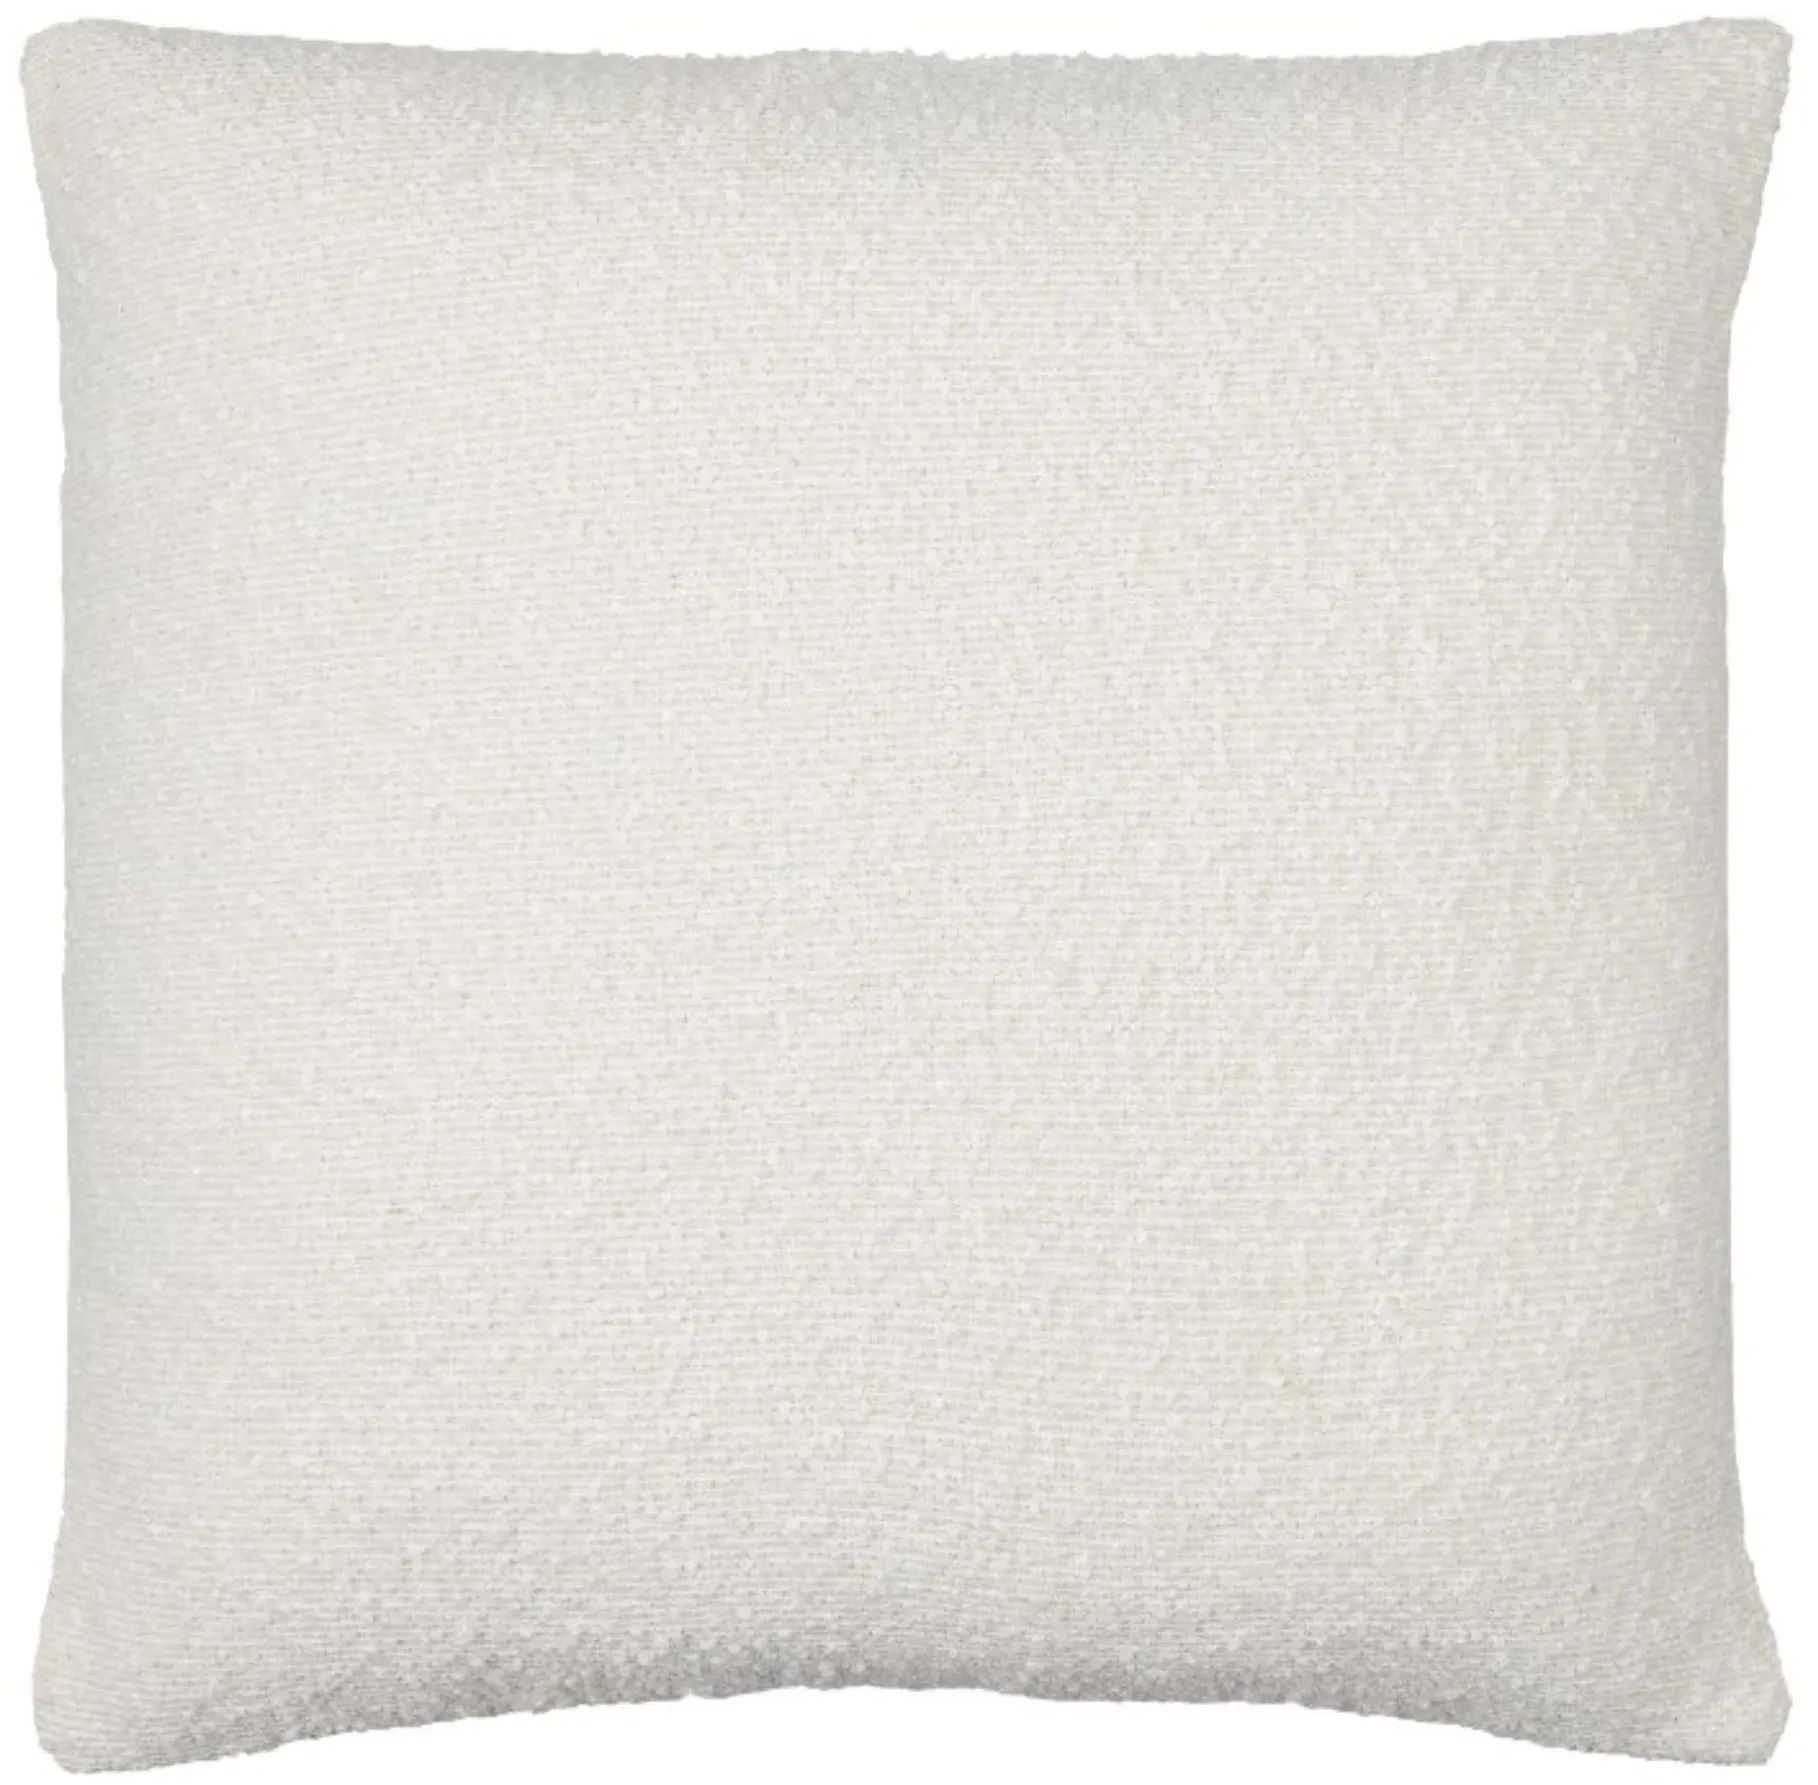 Ivory Pillow 18"W x 18"H